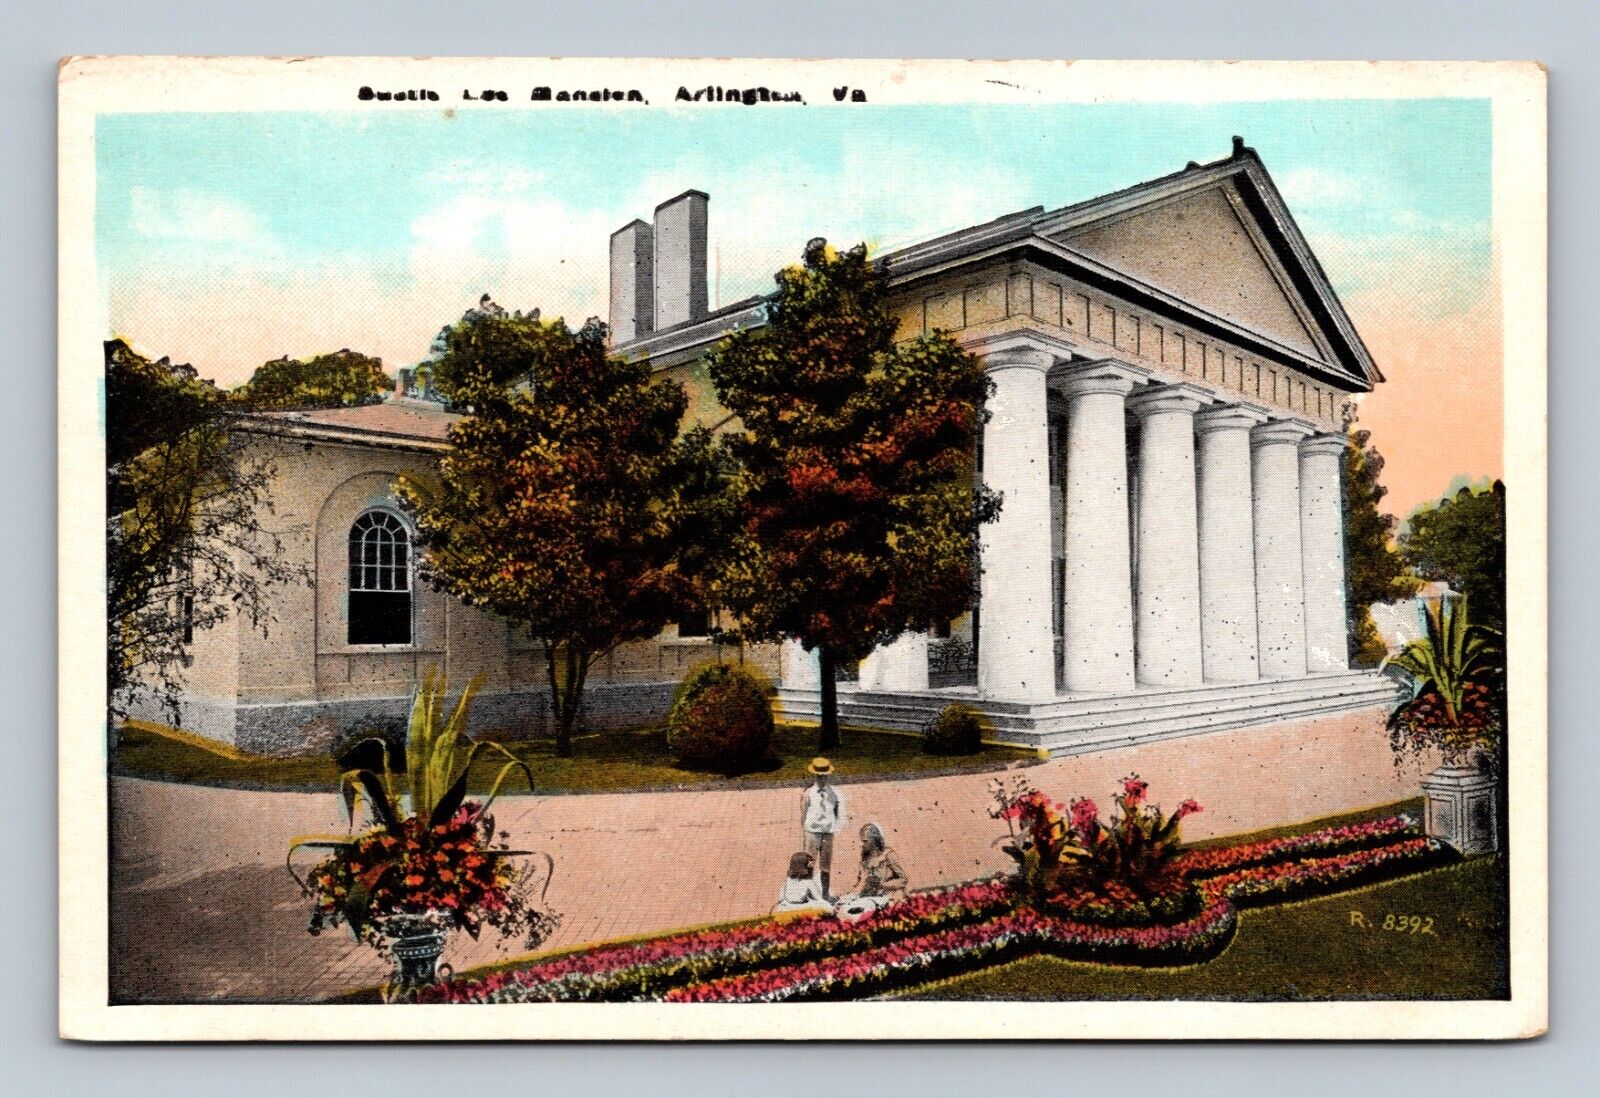 Postcard Curtis Lee Mansion, Arlington VA